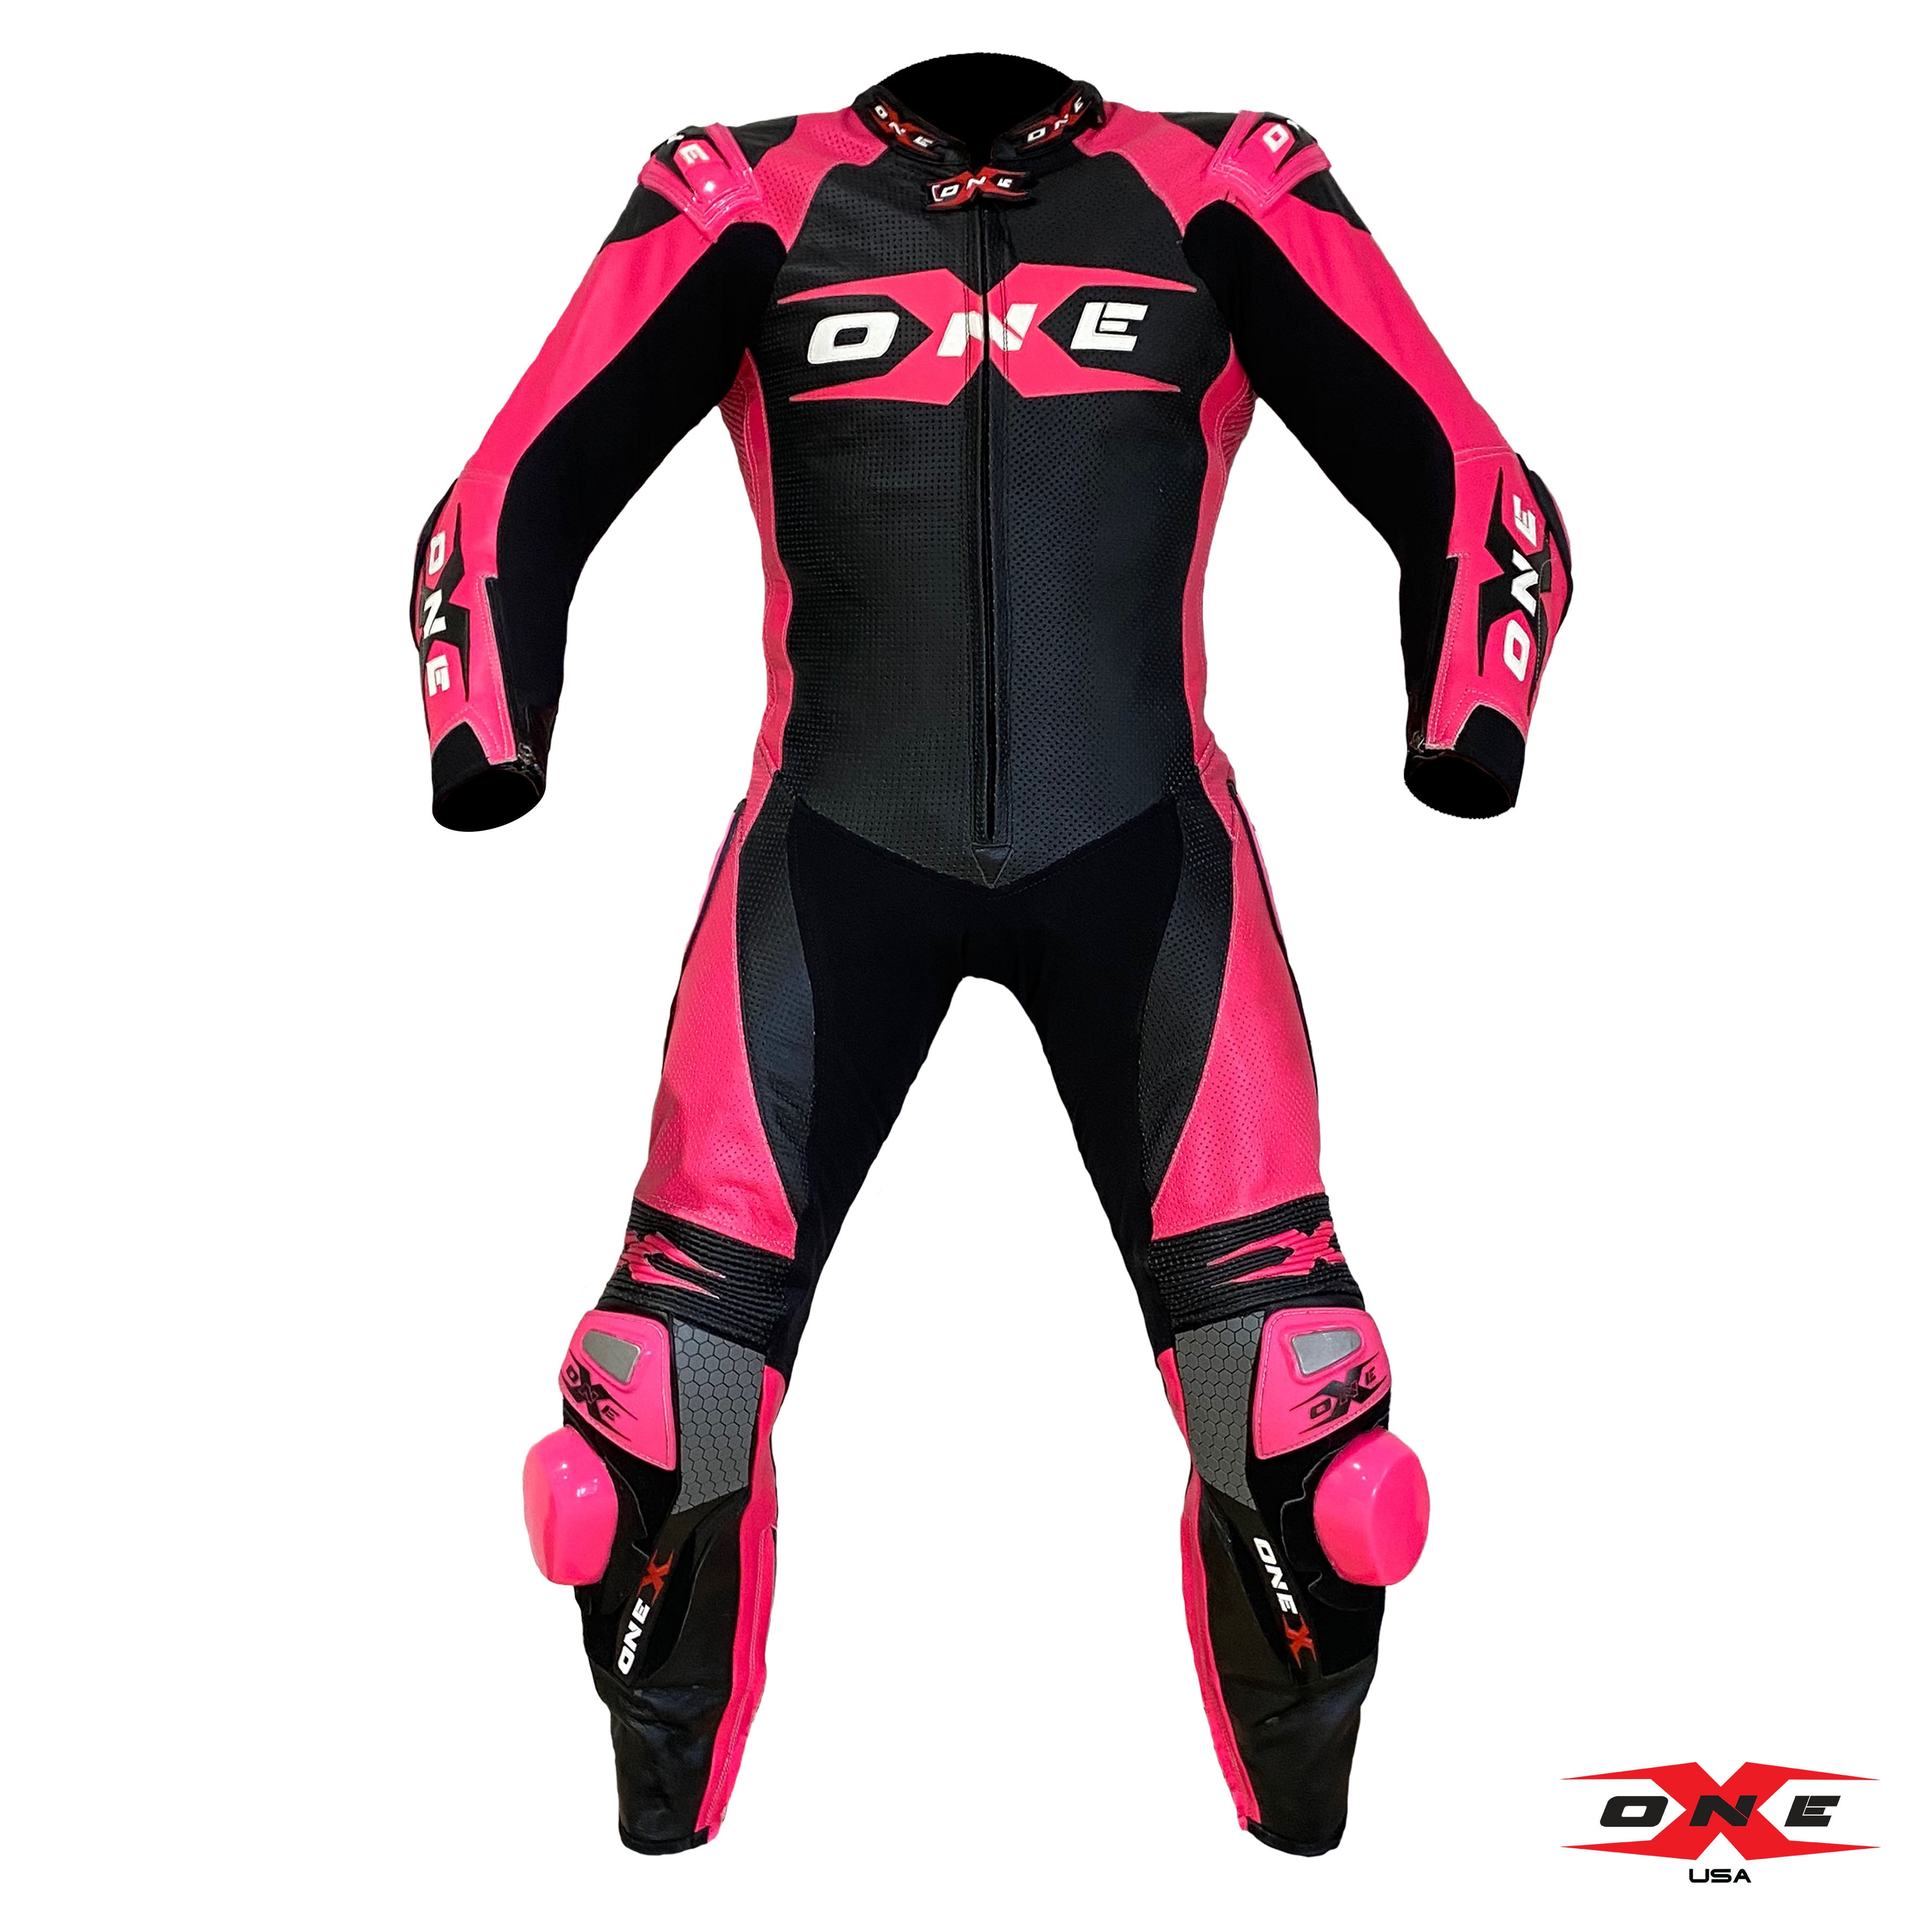 OneX USA XR3 Pro Race Leather Racing Suit - Black/Fluor Pink